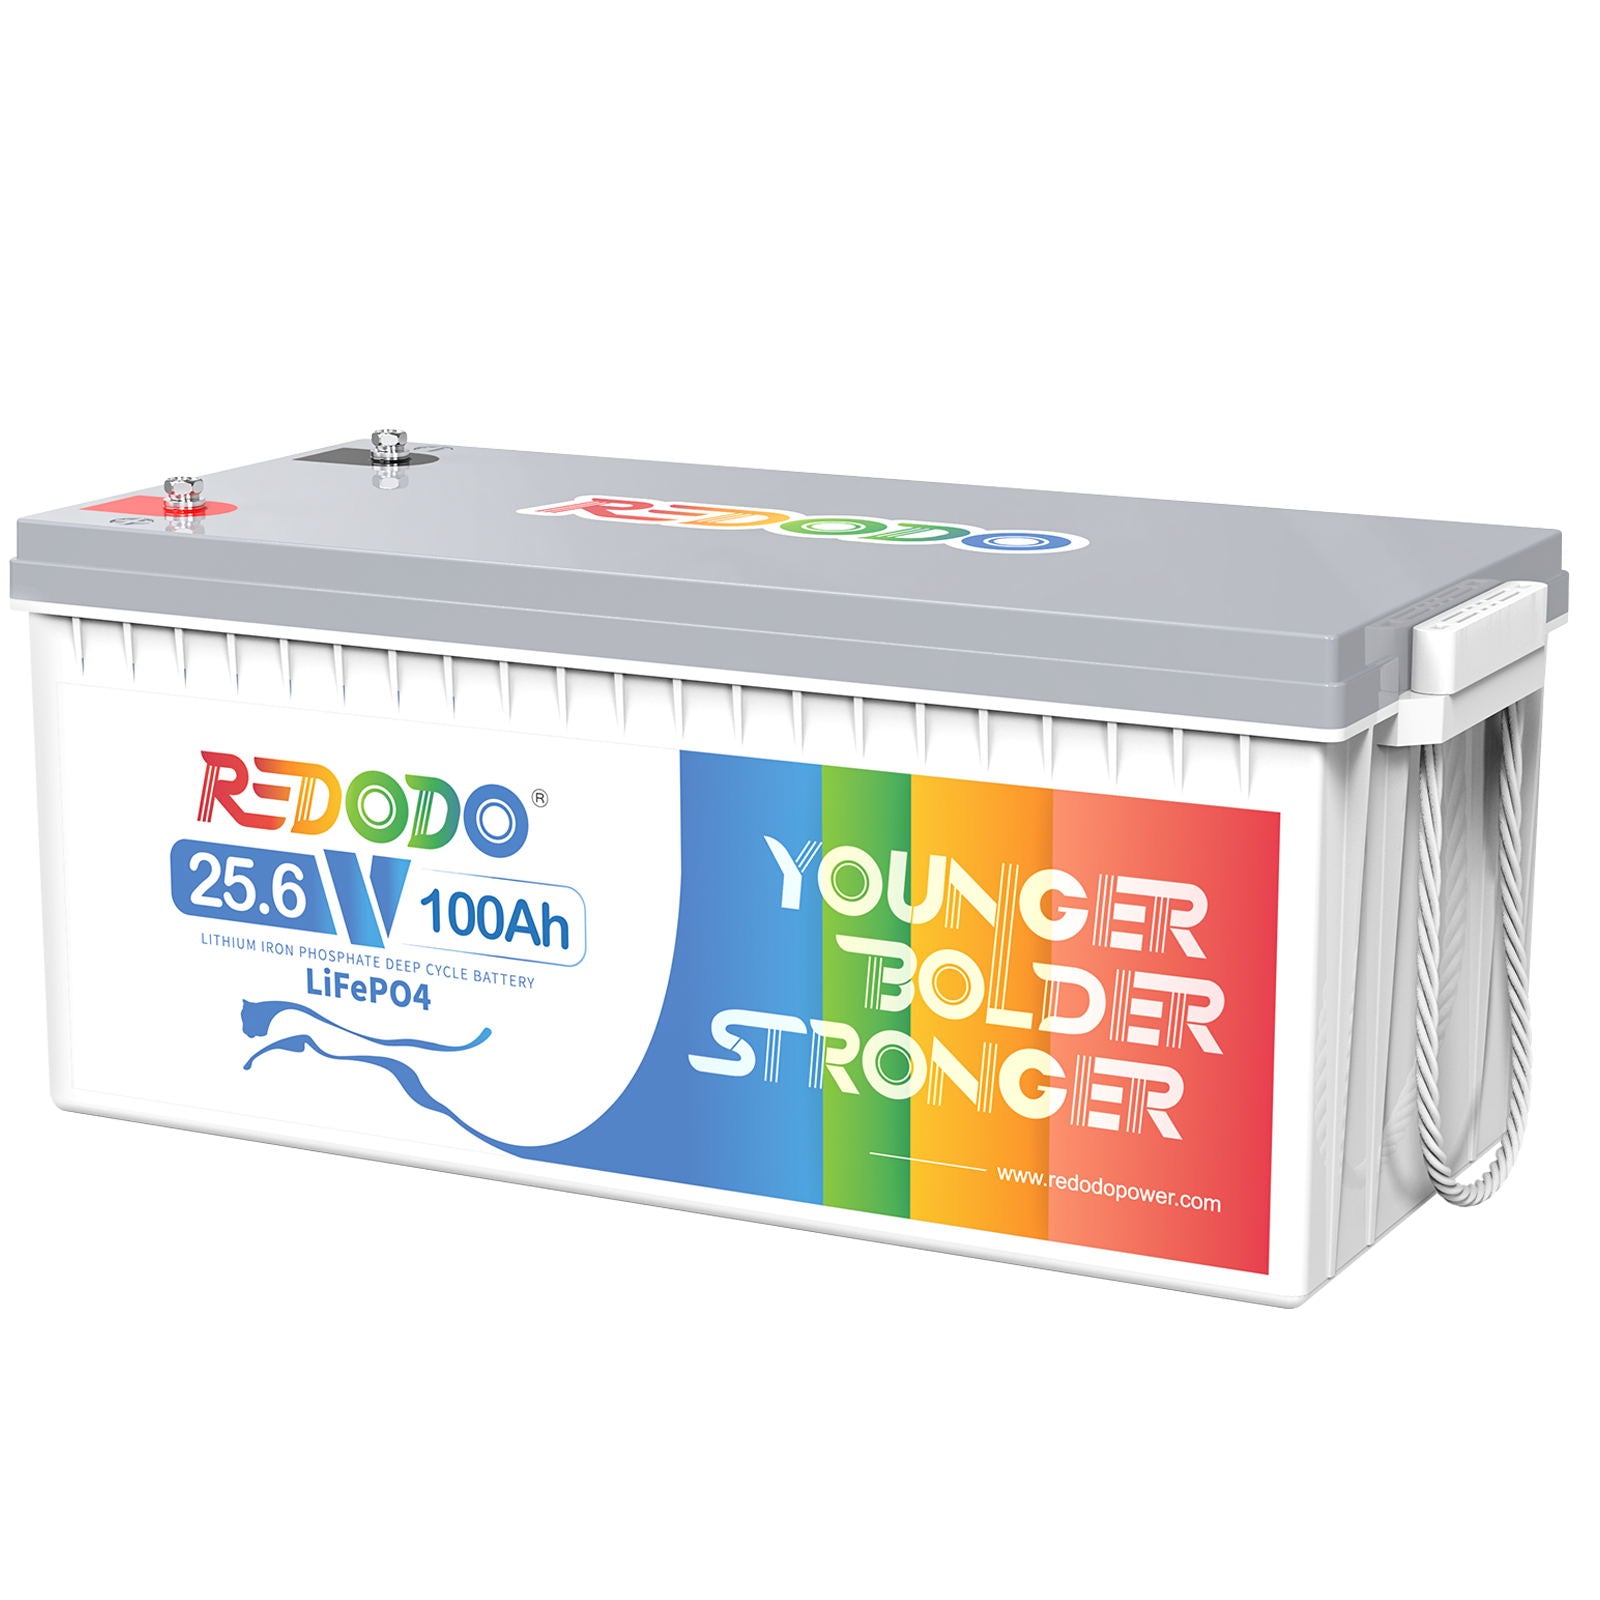 Redodo 100Ah LiFePO4 24V Lithium Batterie mit Max. 2560W Leistung